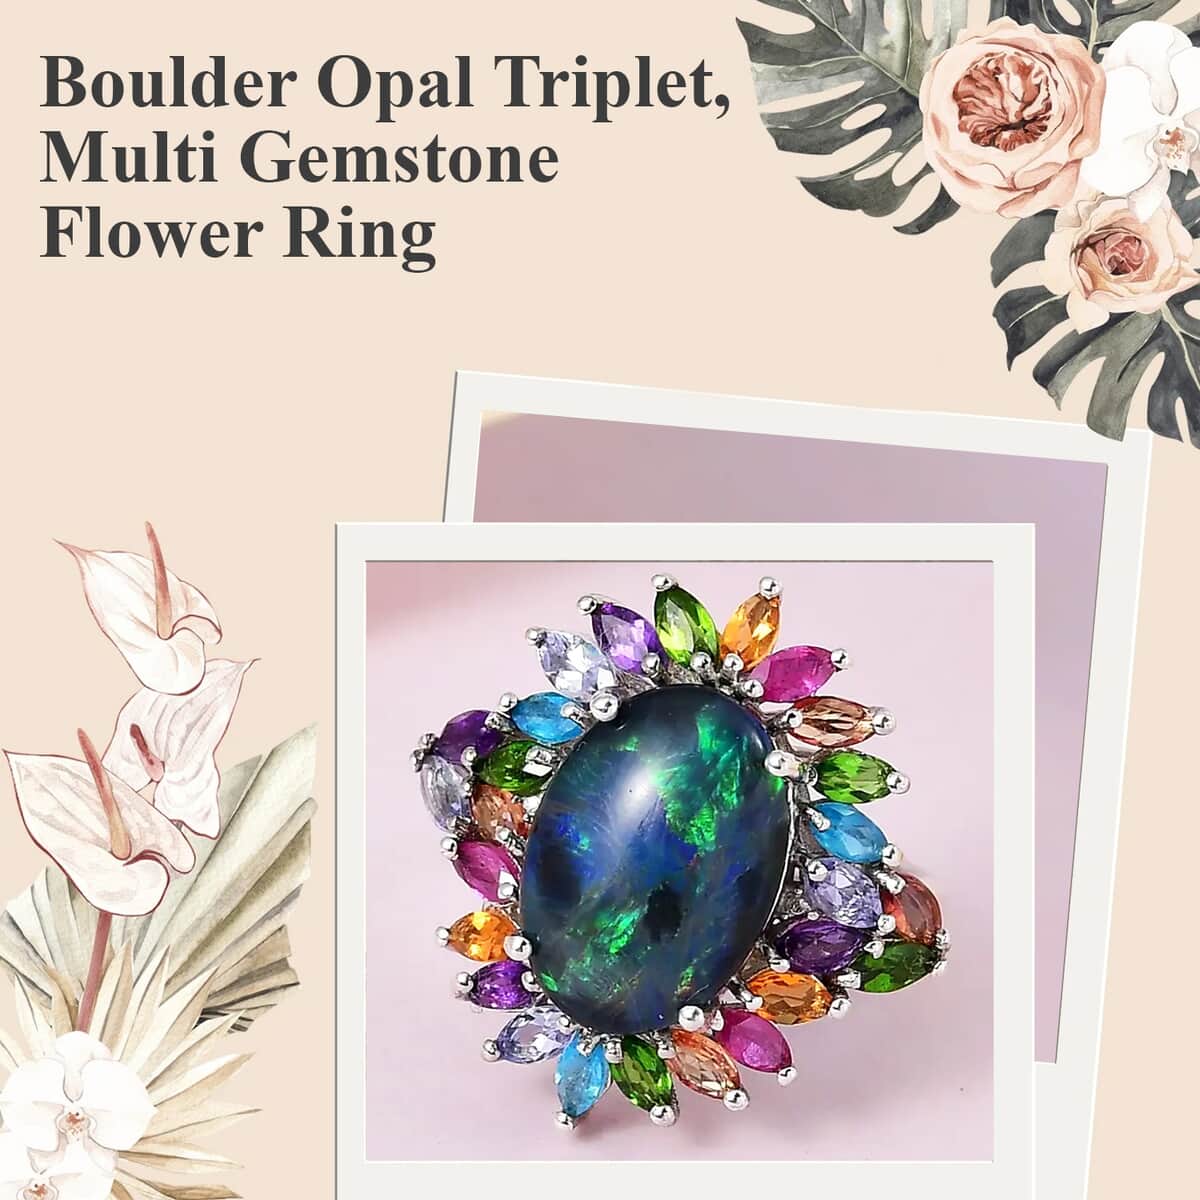 Boulder Opal Triplet, Multi Gemstone 5.65 ctw Flower Ring in Platinum Over Sterling Silver, Statement Rings For Women (Size 11.0) image number 1